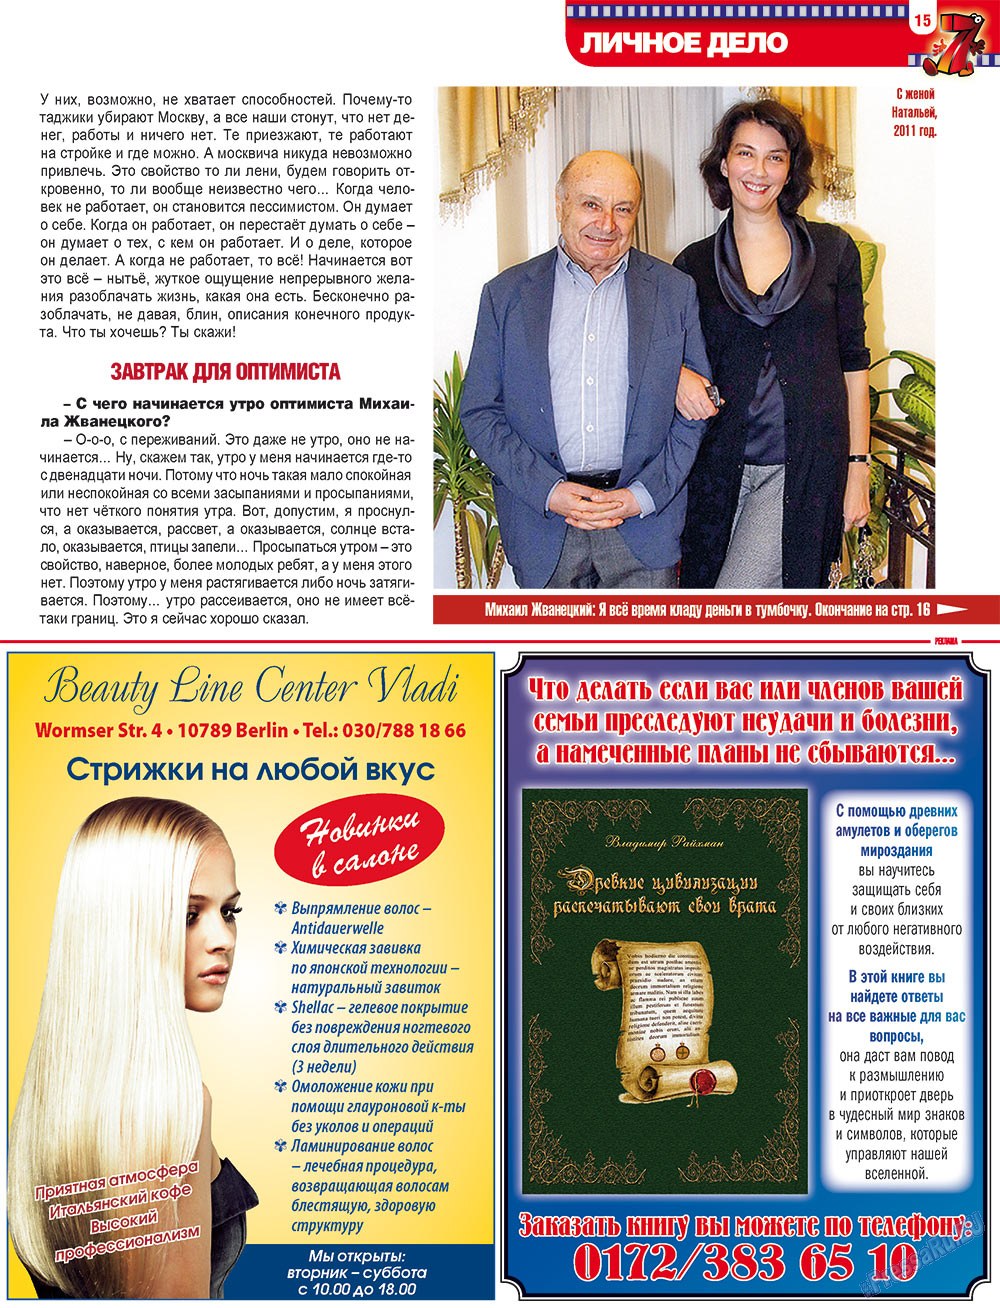 7плюс7я (журнал). 2012 год, номер 21, стр. 15